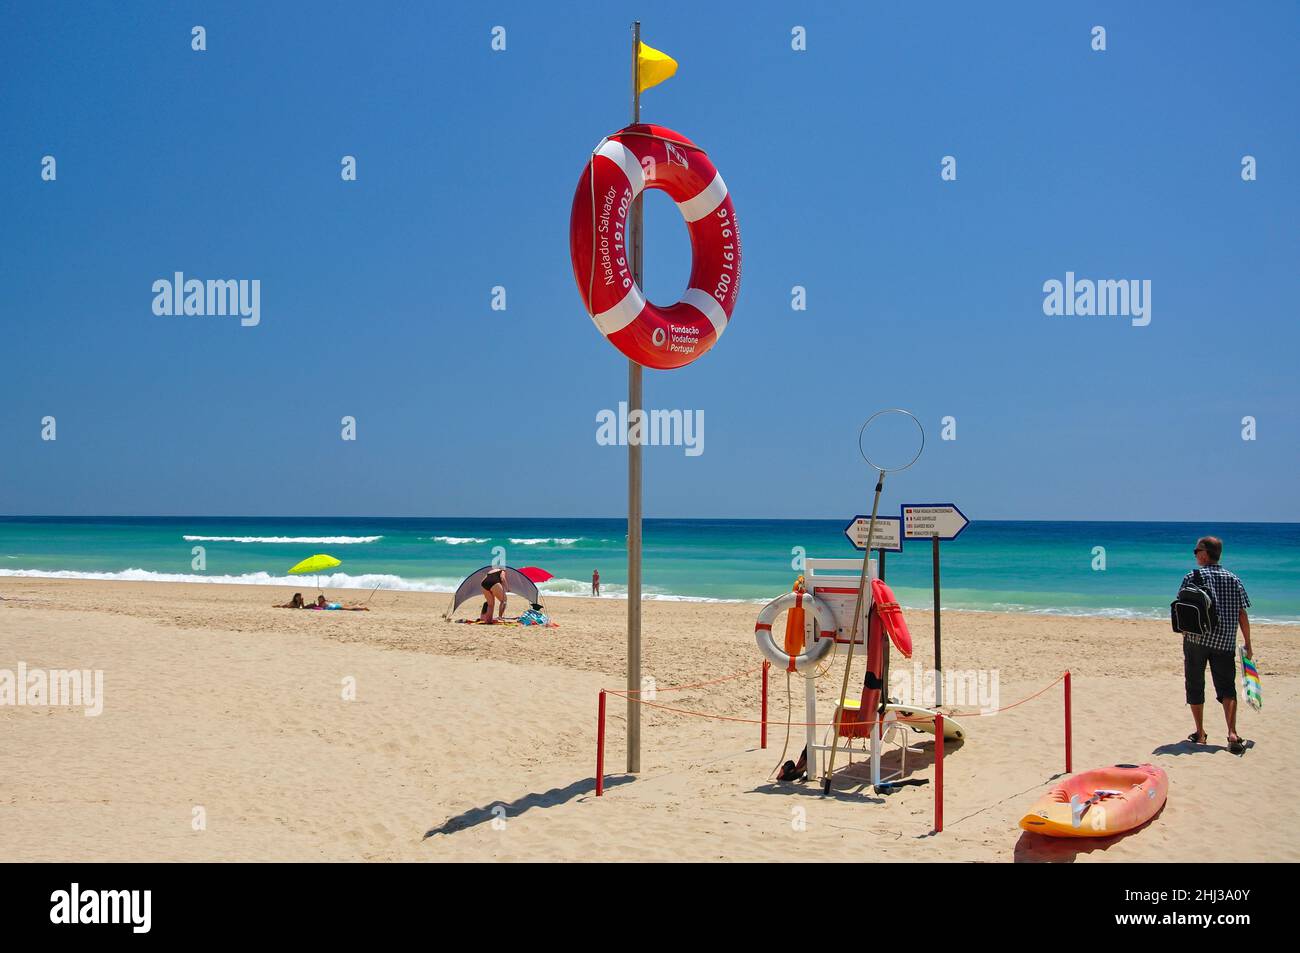 Praia de Salema, Salema, Algarve Region, Portugal Stock Photo